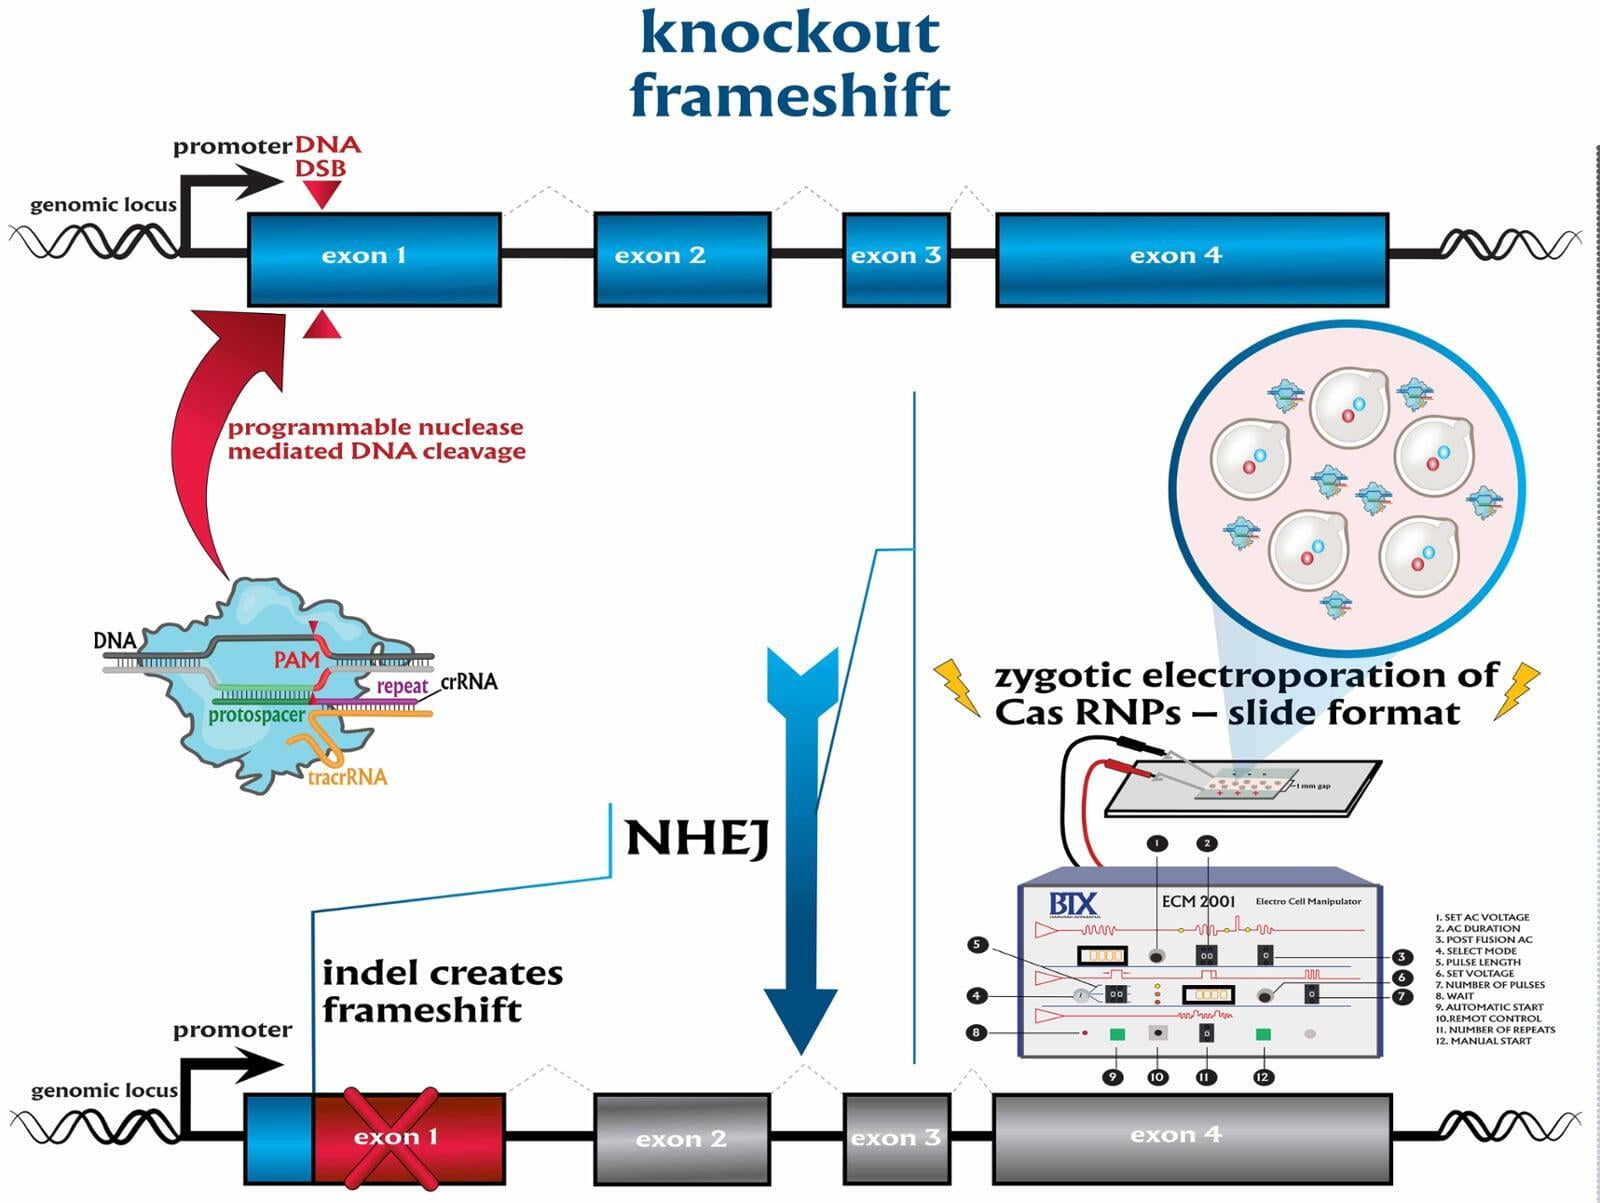 gene knockout created by frameshift mutation via CRISPR